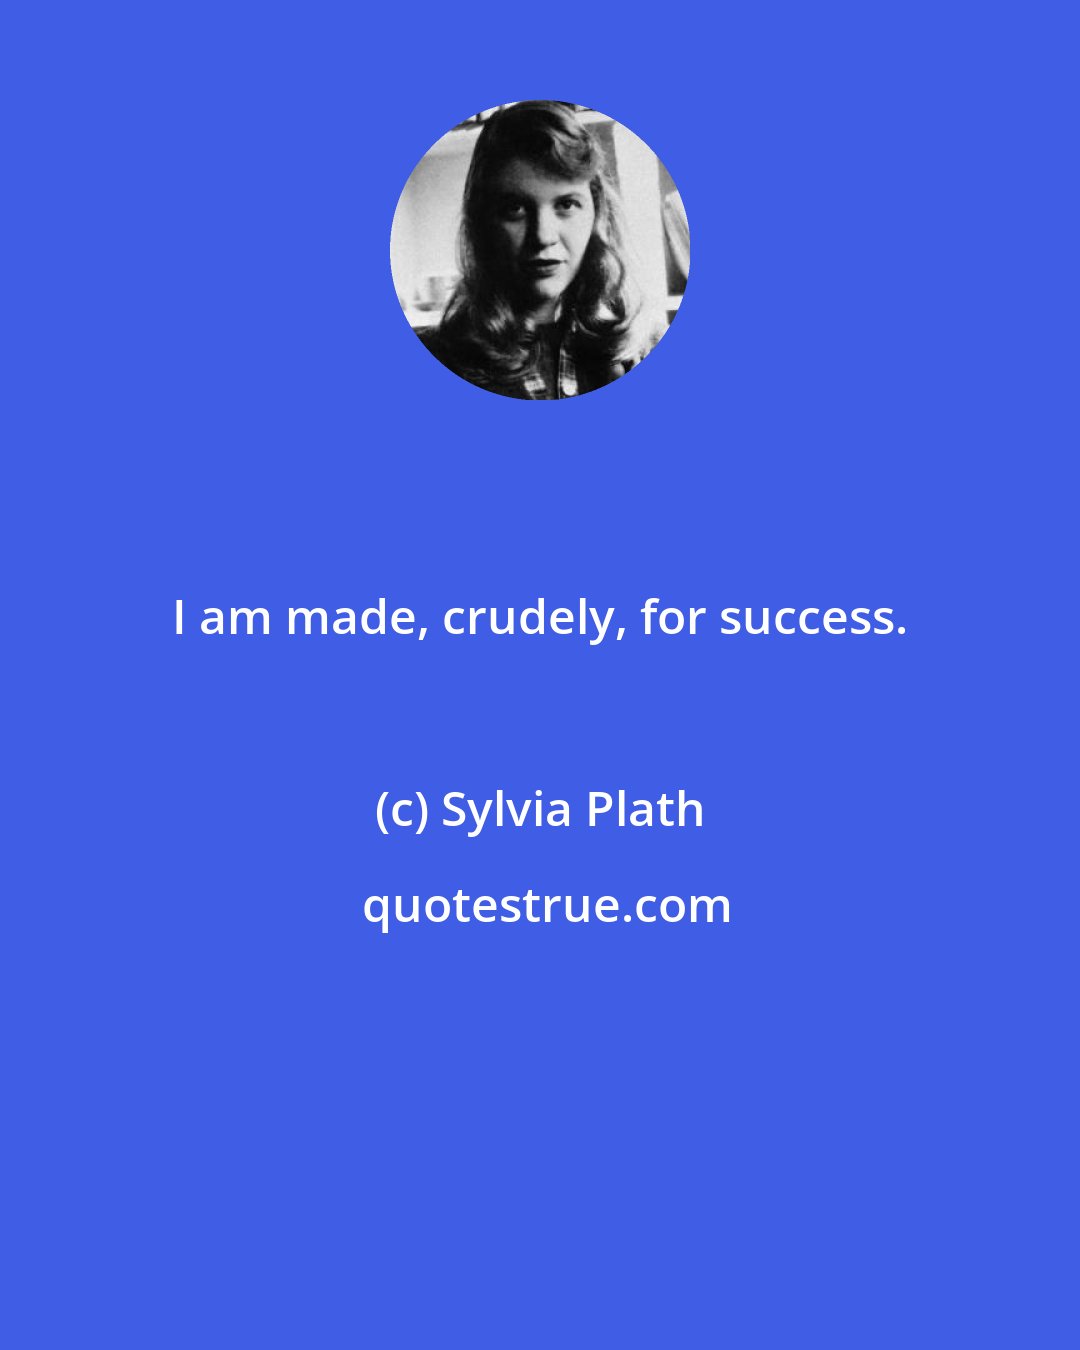 Sylvia Plath: I am made, crudely, for success.